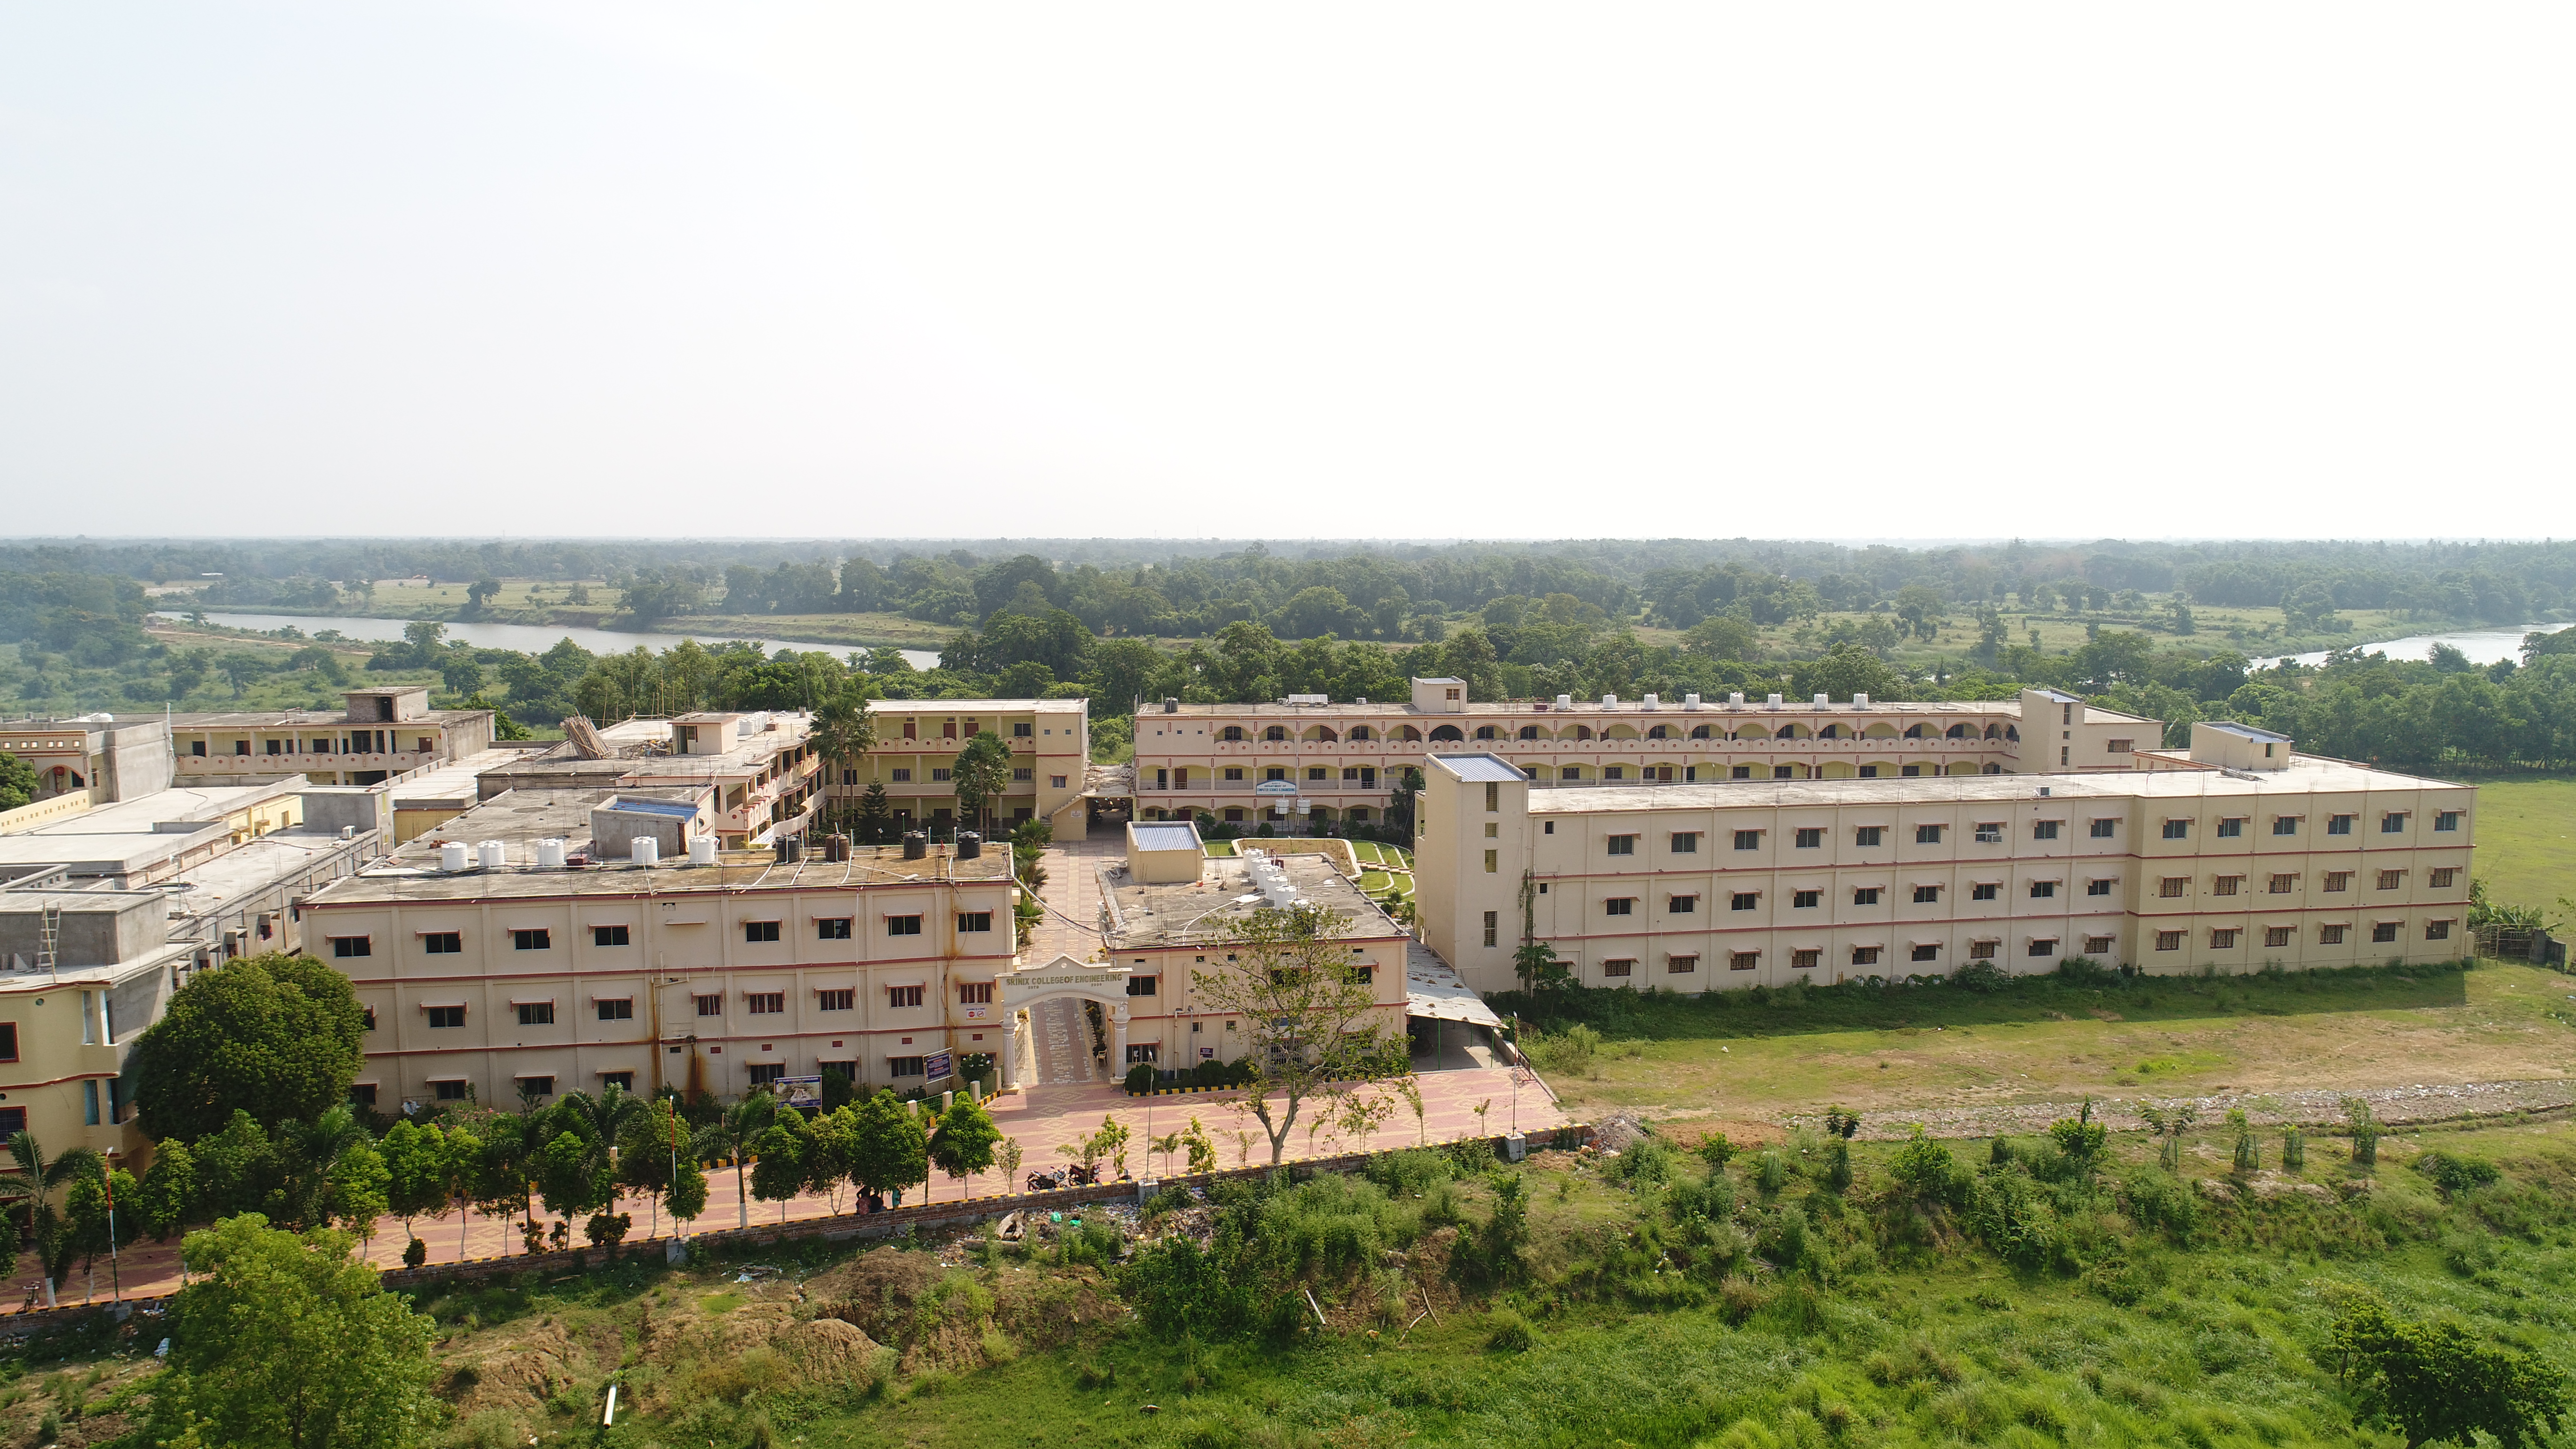 Srinix College of Engineering Balasore 